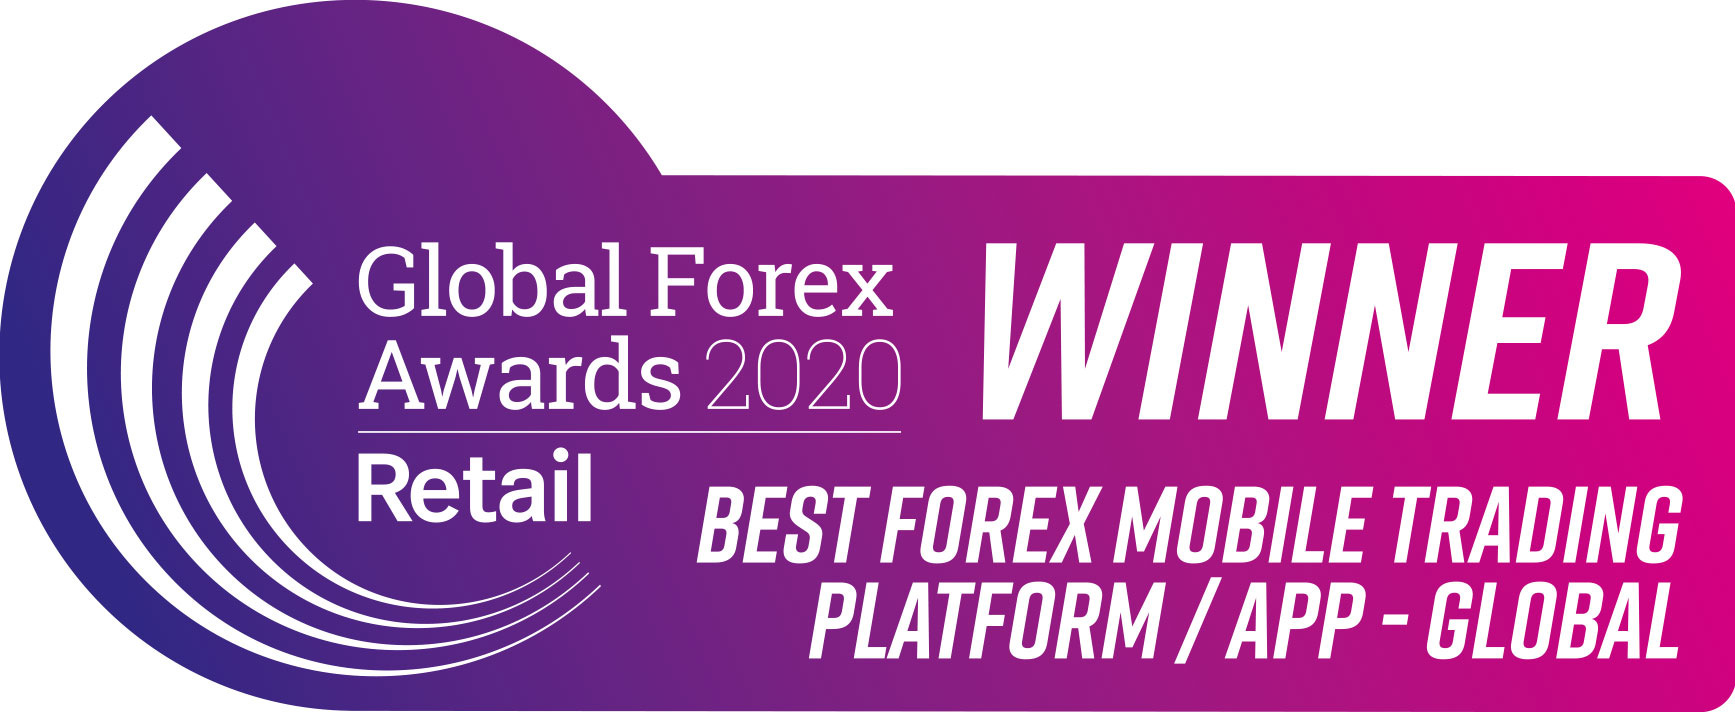 Best Forex Mobile Trading Platform - App - Global.jpg